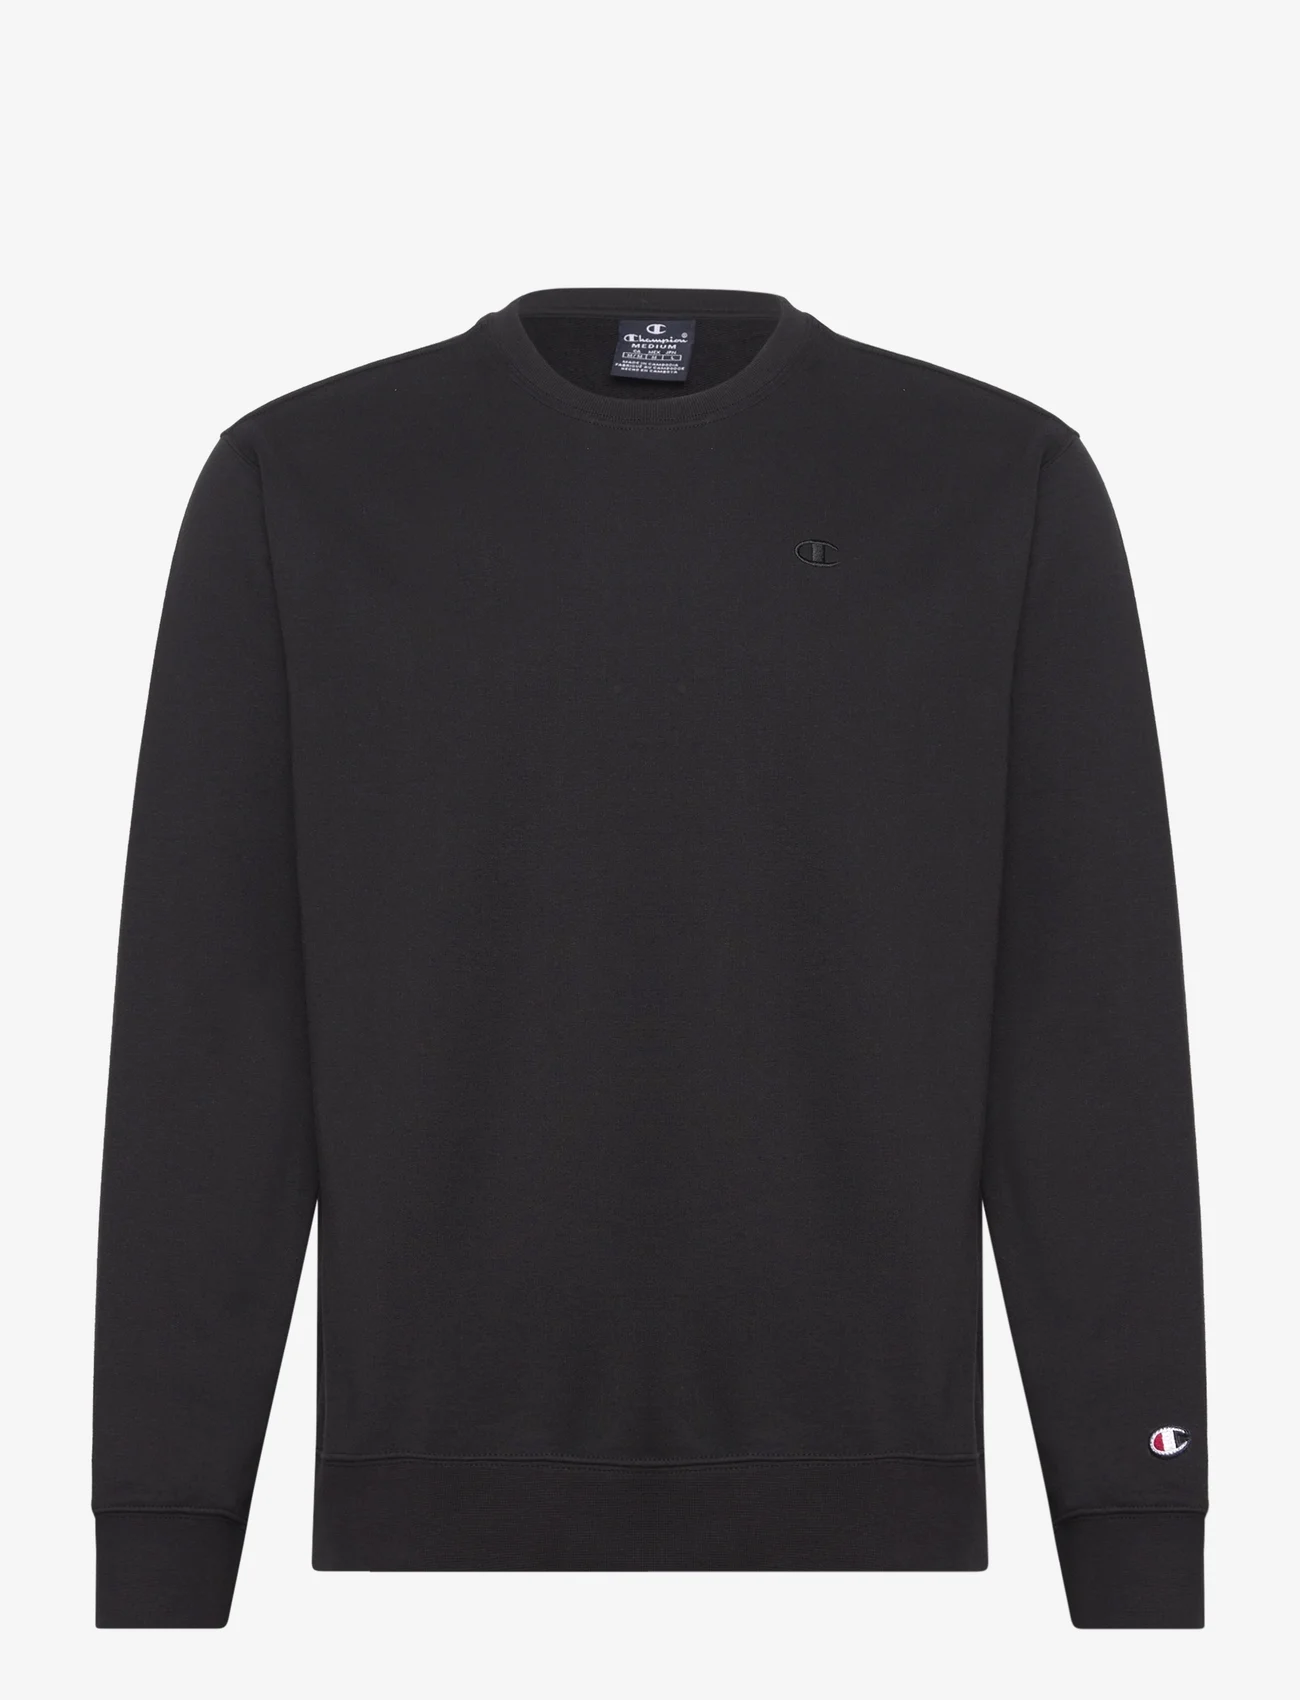 Champion - Crewneck Sweatshirt - hoodies - black beauty - 0